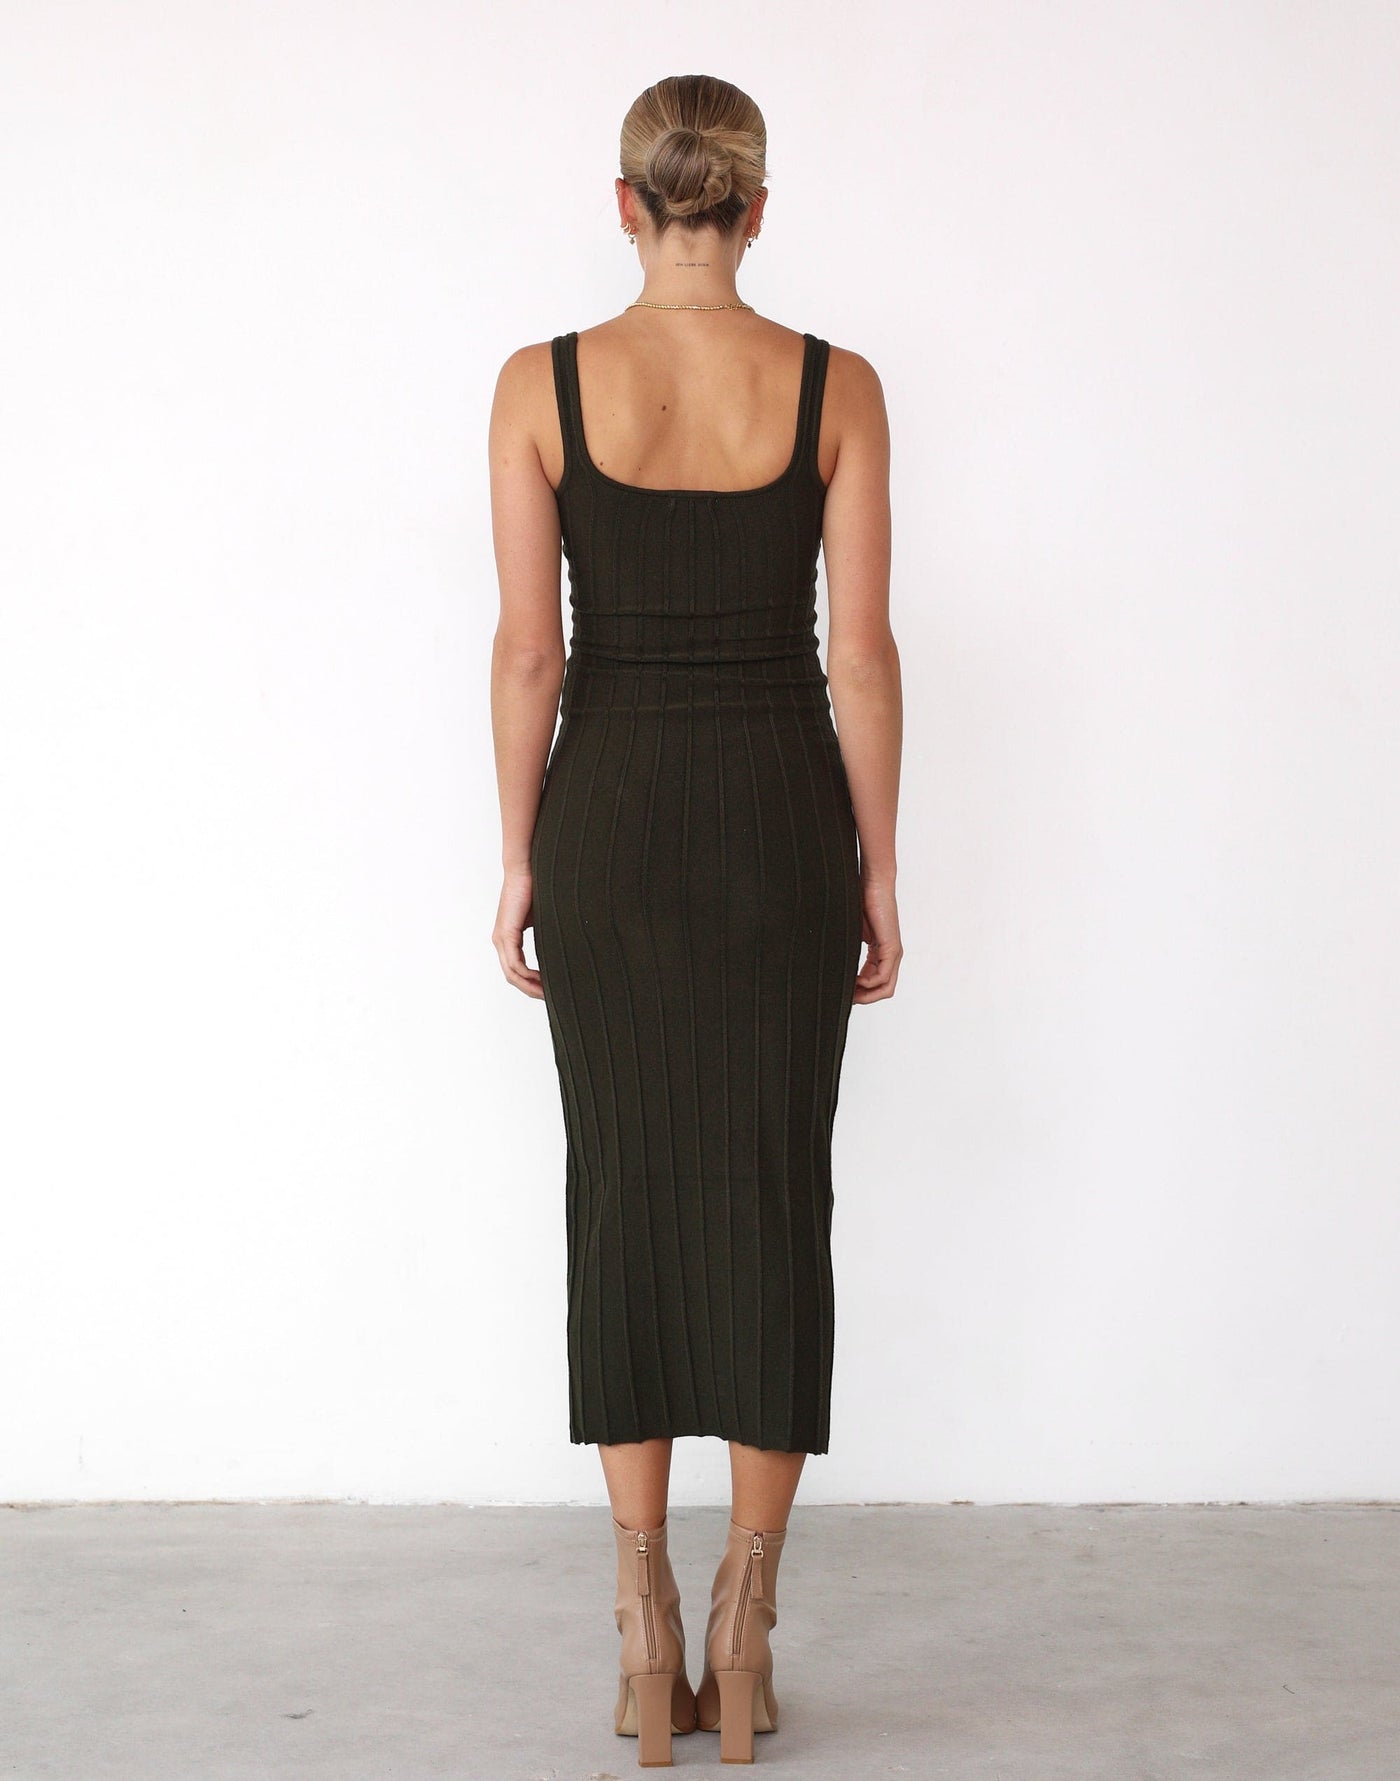 Ephemeral Maxi Dress (Moss) - Moss Maxi Dress - Women's Dress - Charcoal Clothing